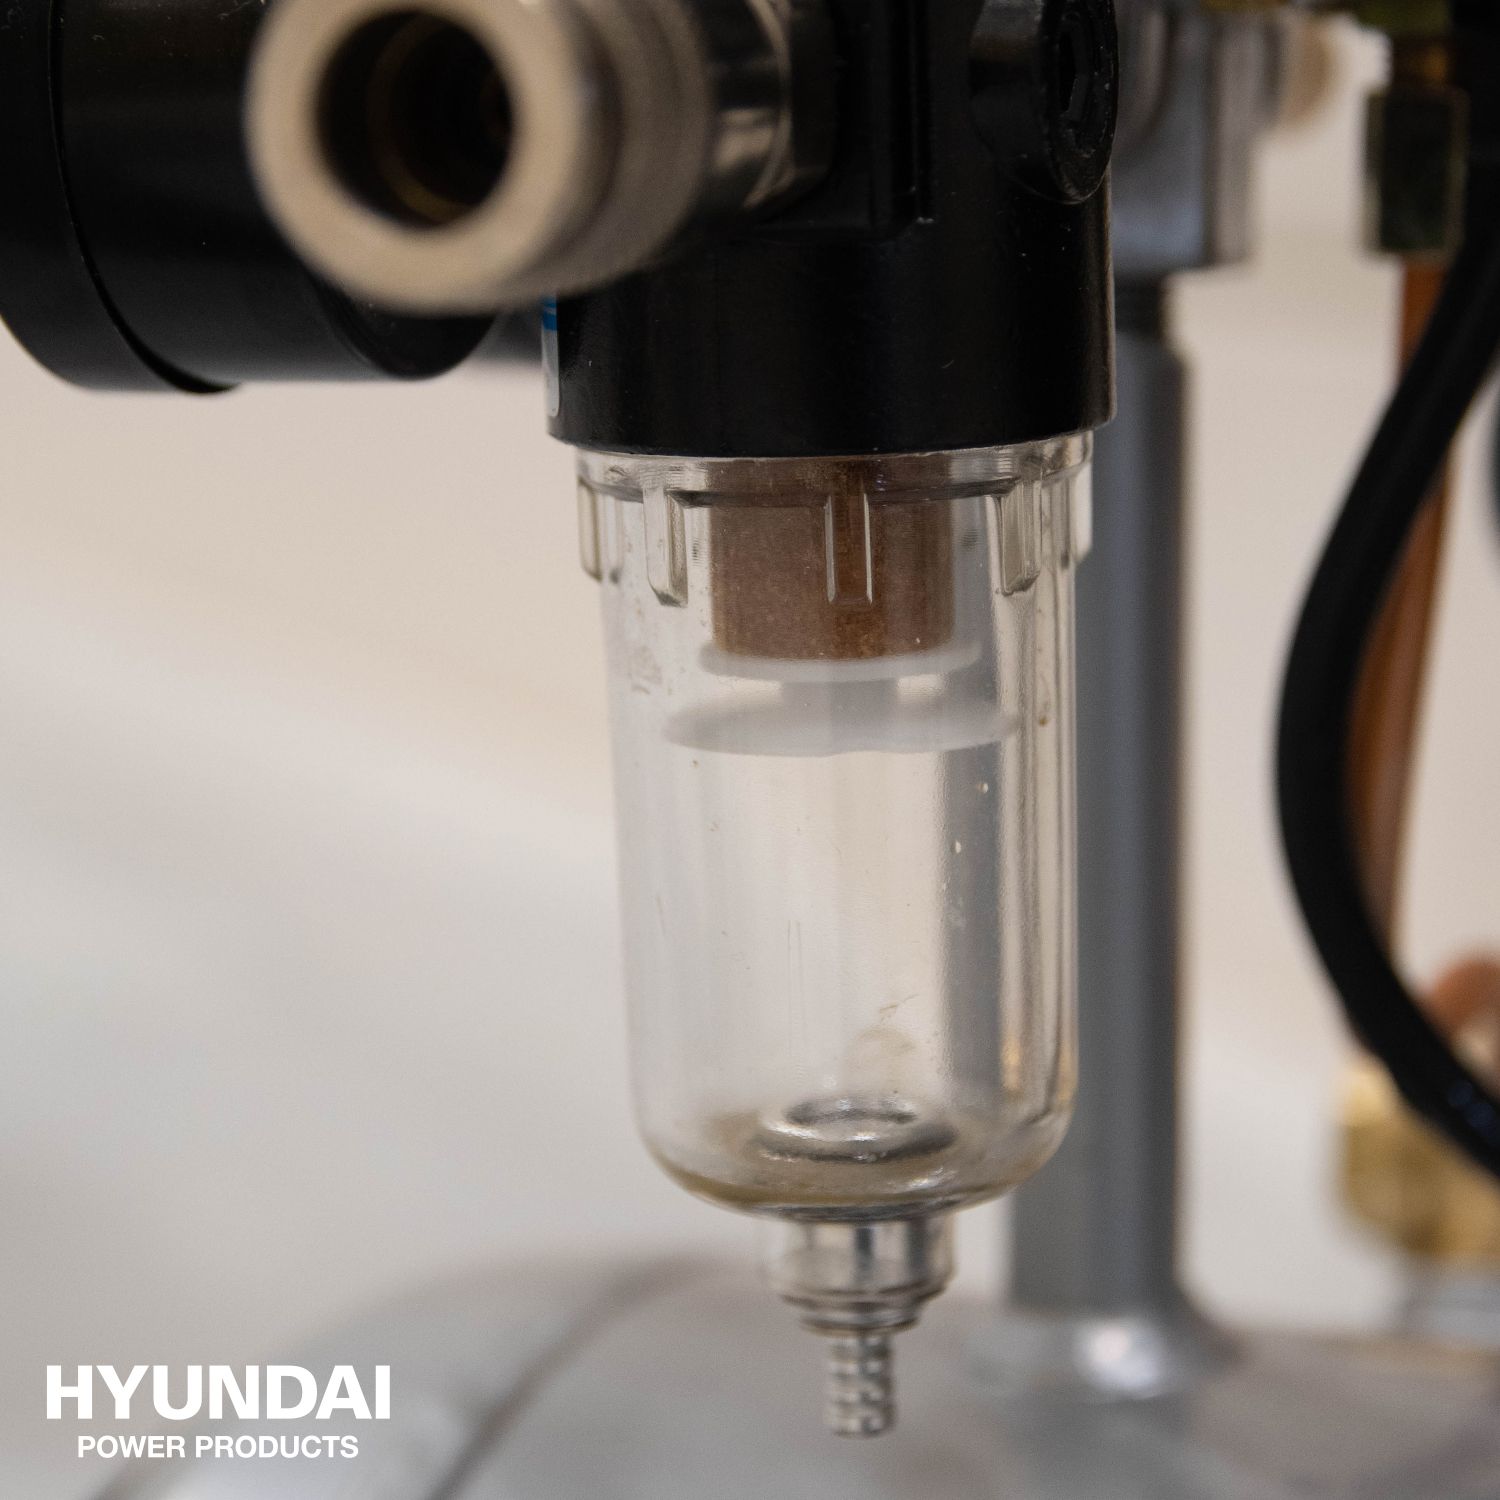 Hyundai stille compressor 30 L 8 bar